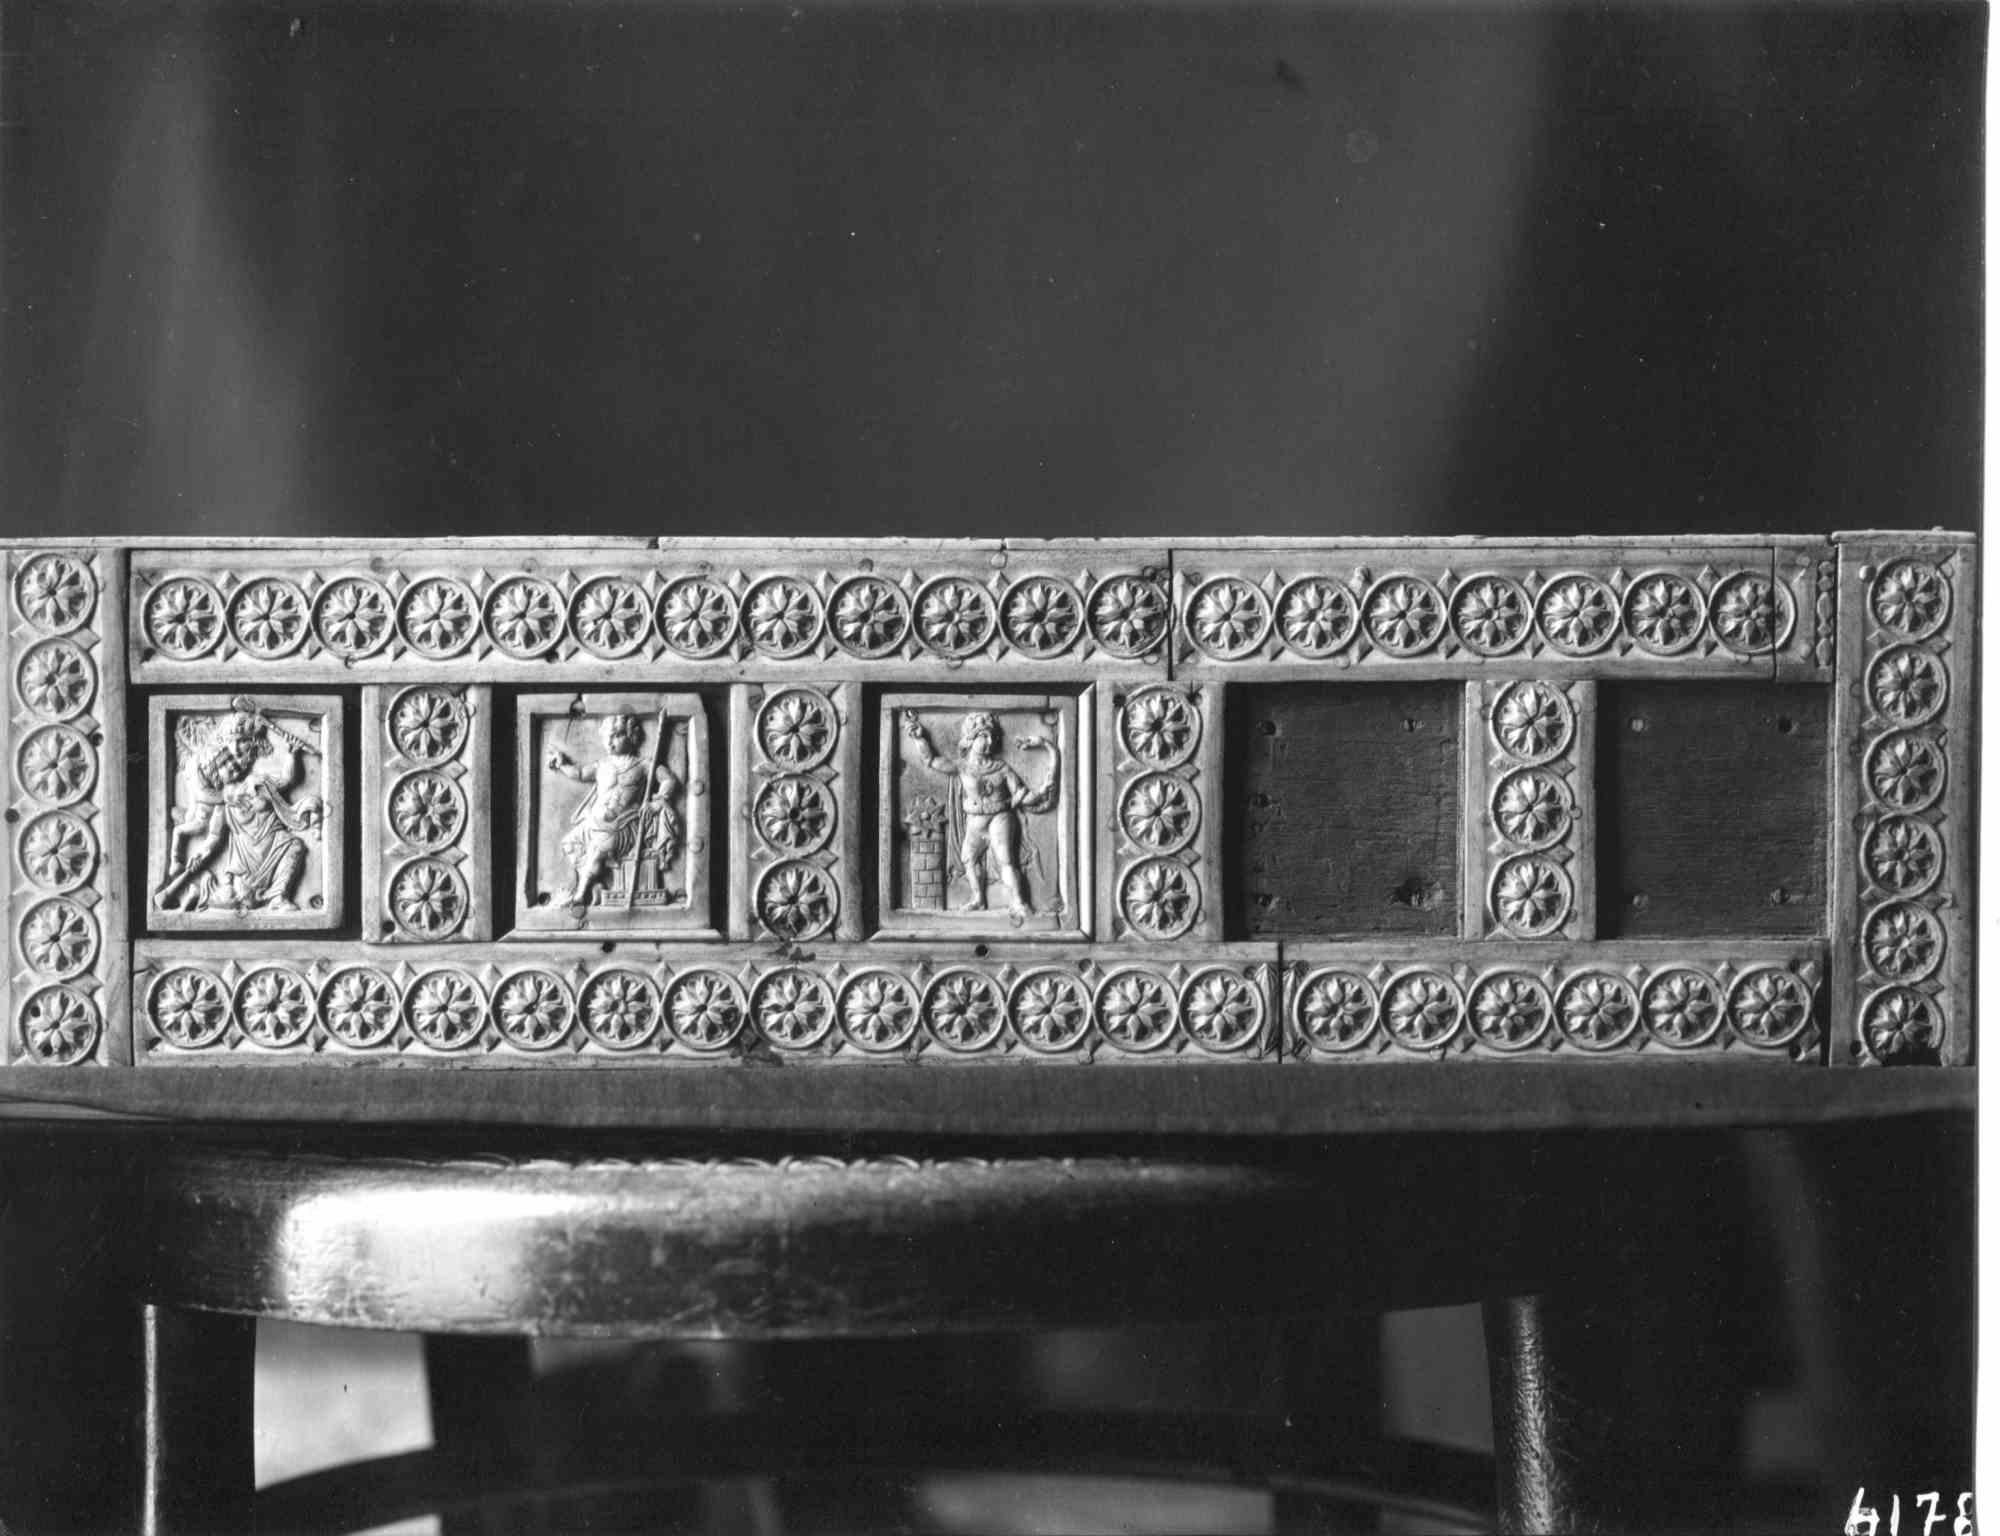 Osvaldo Böhm Figurative Photograph - Byzantine Relief in Venice - Vintage Photo by Osvaldo Bohm - Early 20th Century